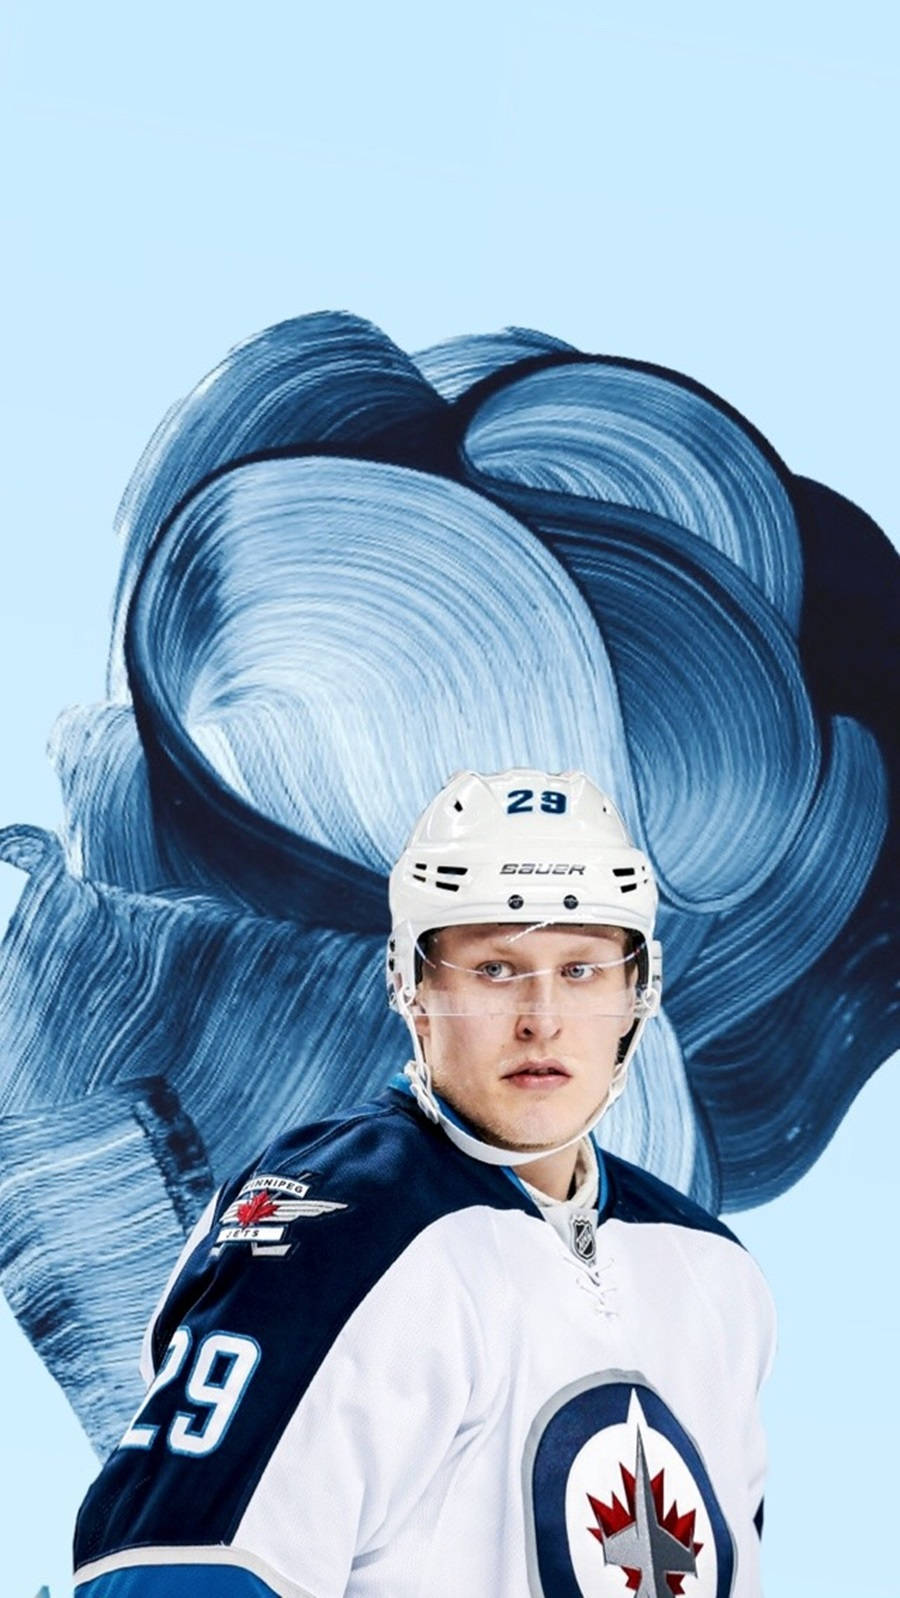 Patrik Laine #29 Winnipeg Jets Wallpaper